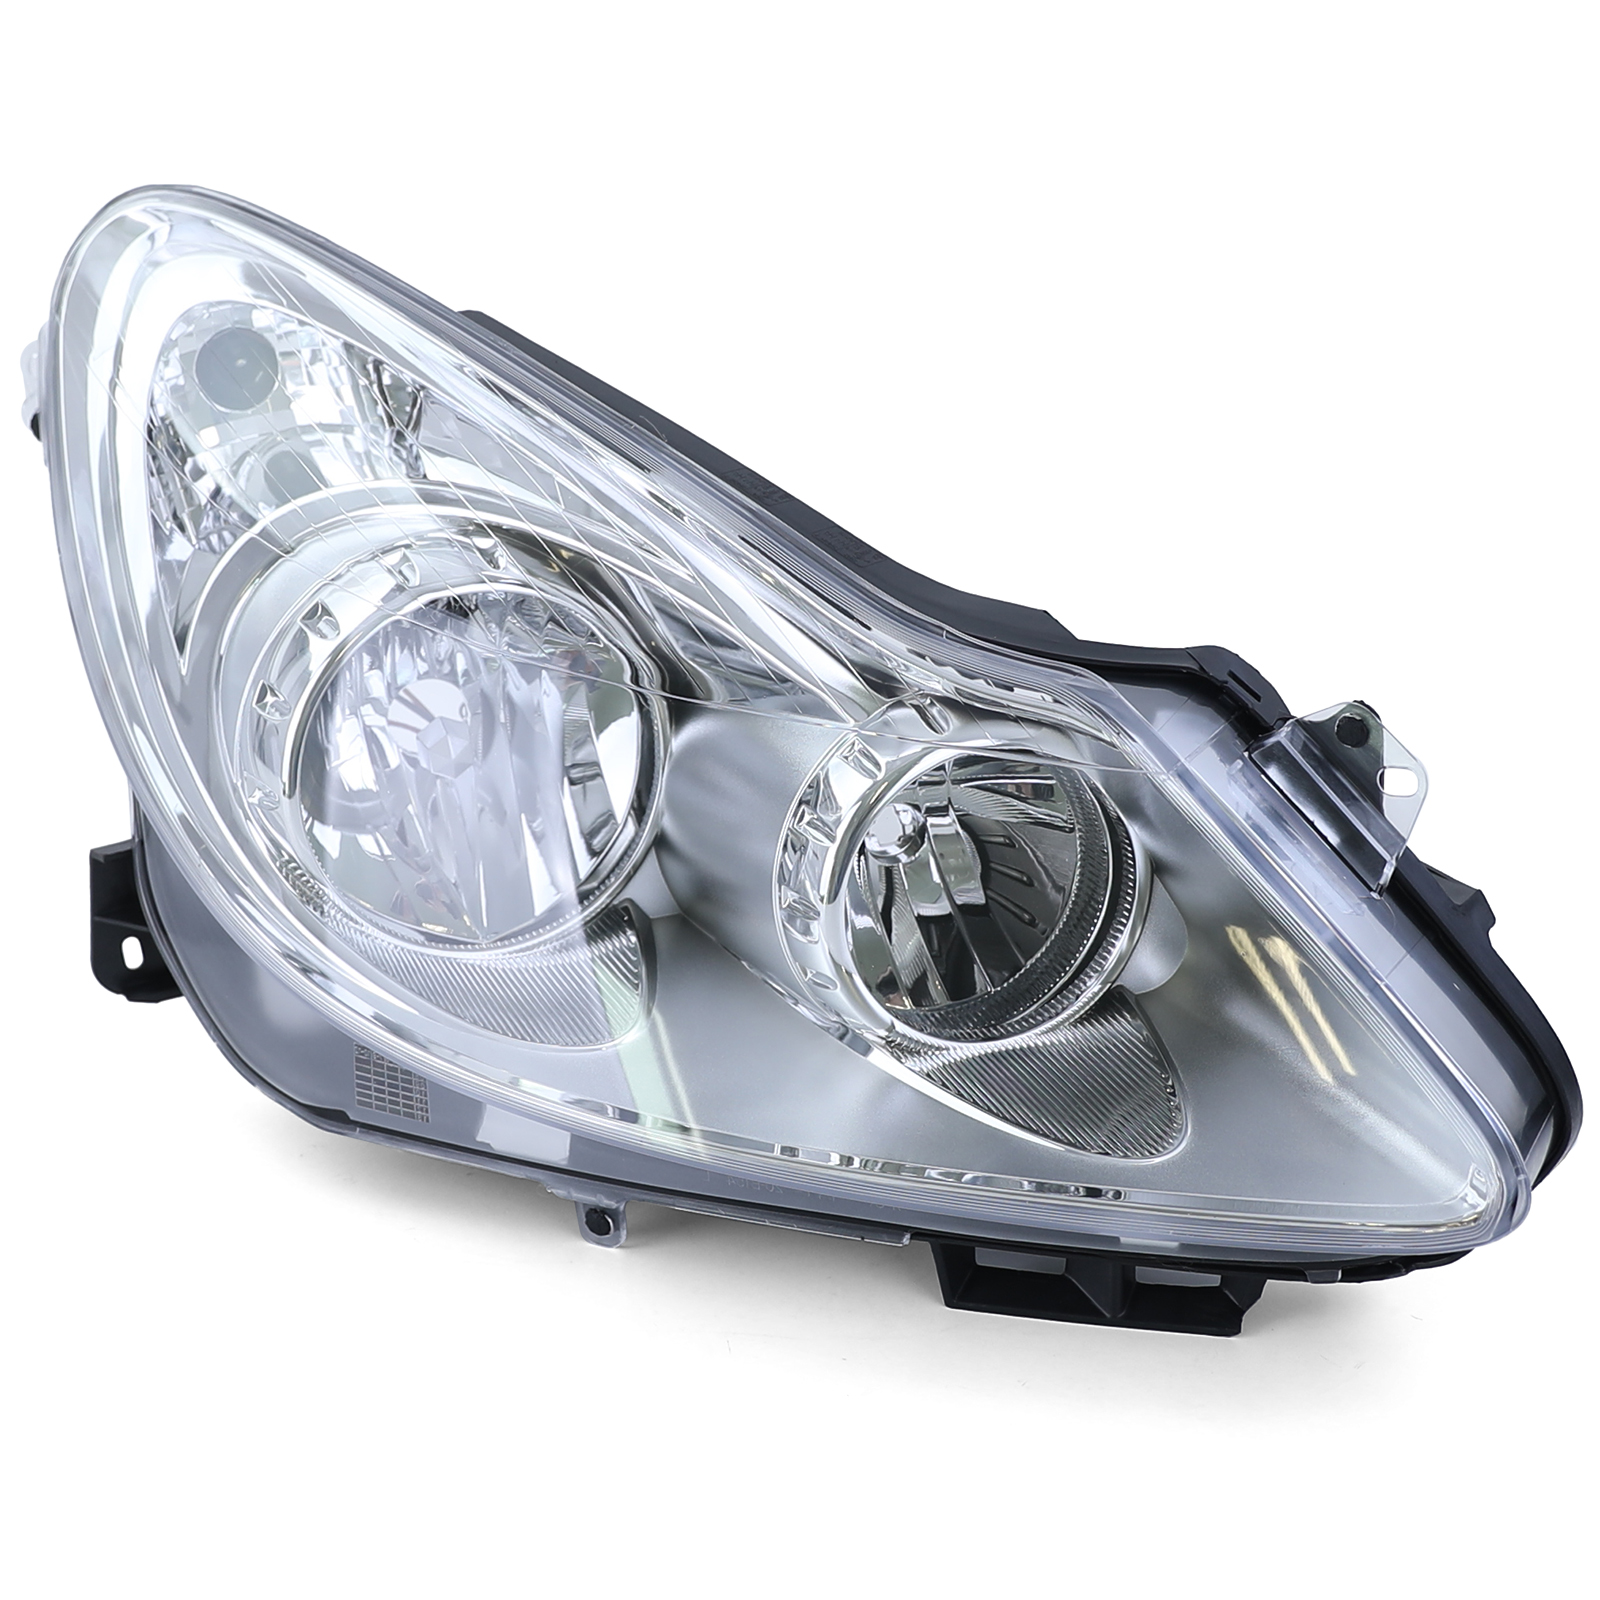 Opel Corsa E: Beleuchtung und Leuchtweitenregulierung